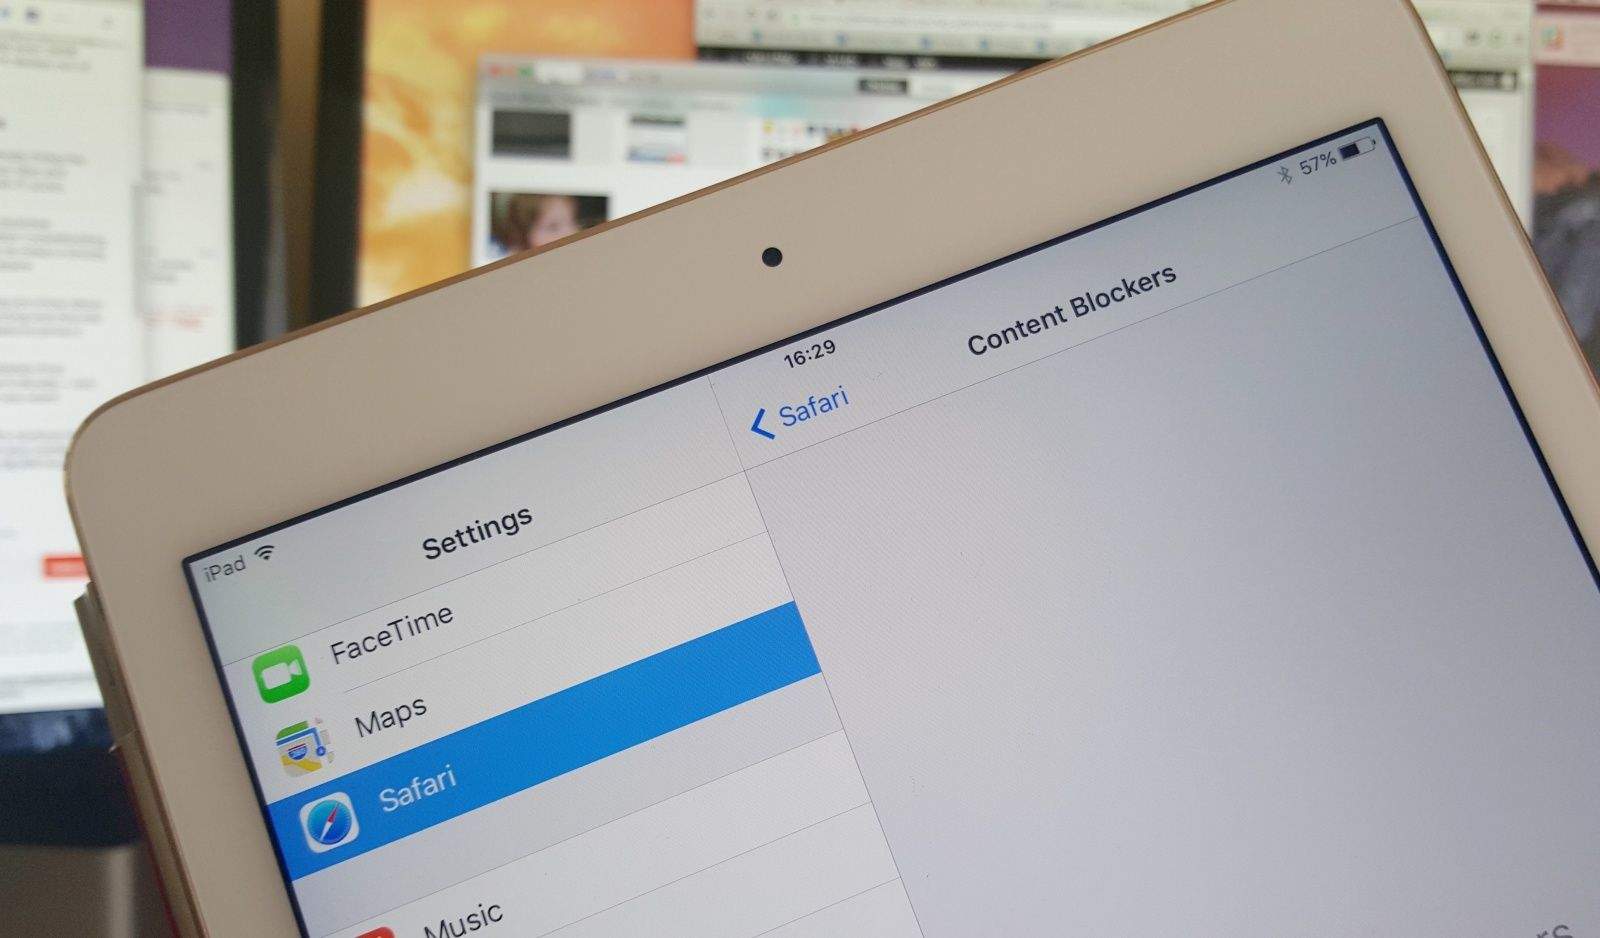 Safari's new Content Blockers settings in iOS 9.